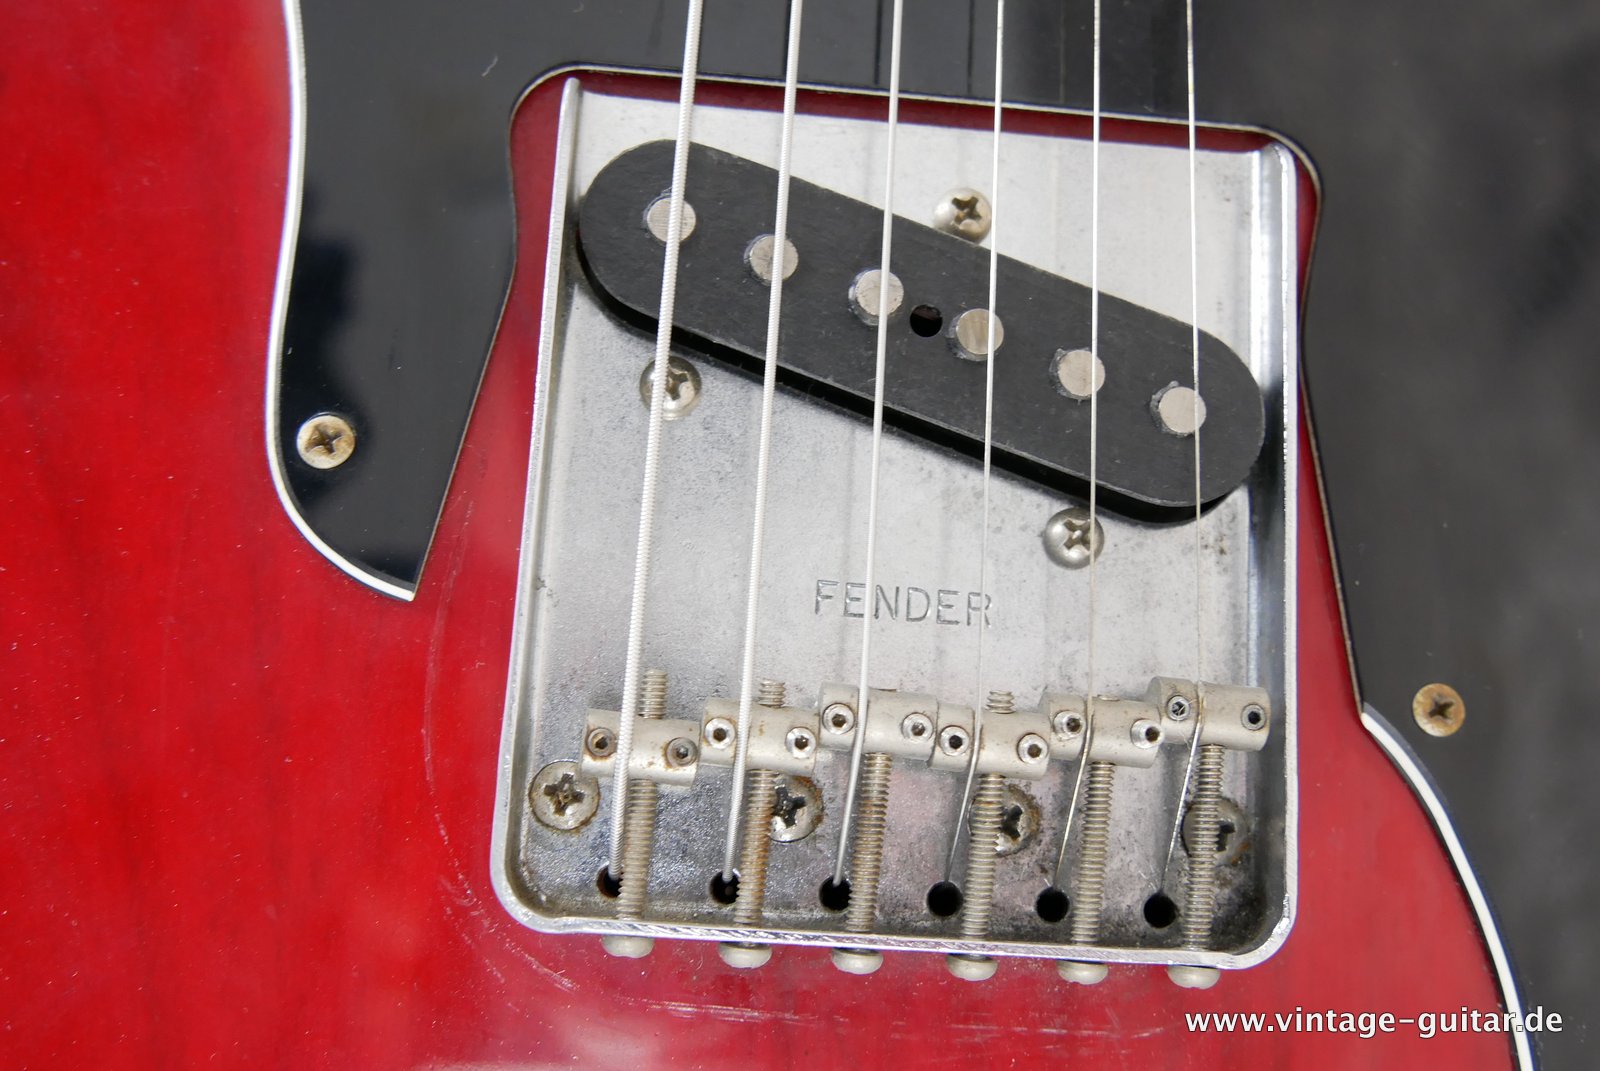 Fender-Telecaster-Custom-1980-Marocco-Red-021.JPG